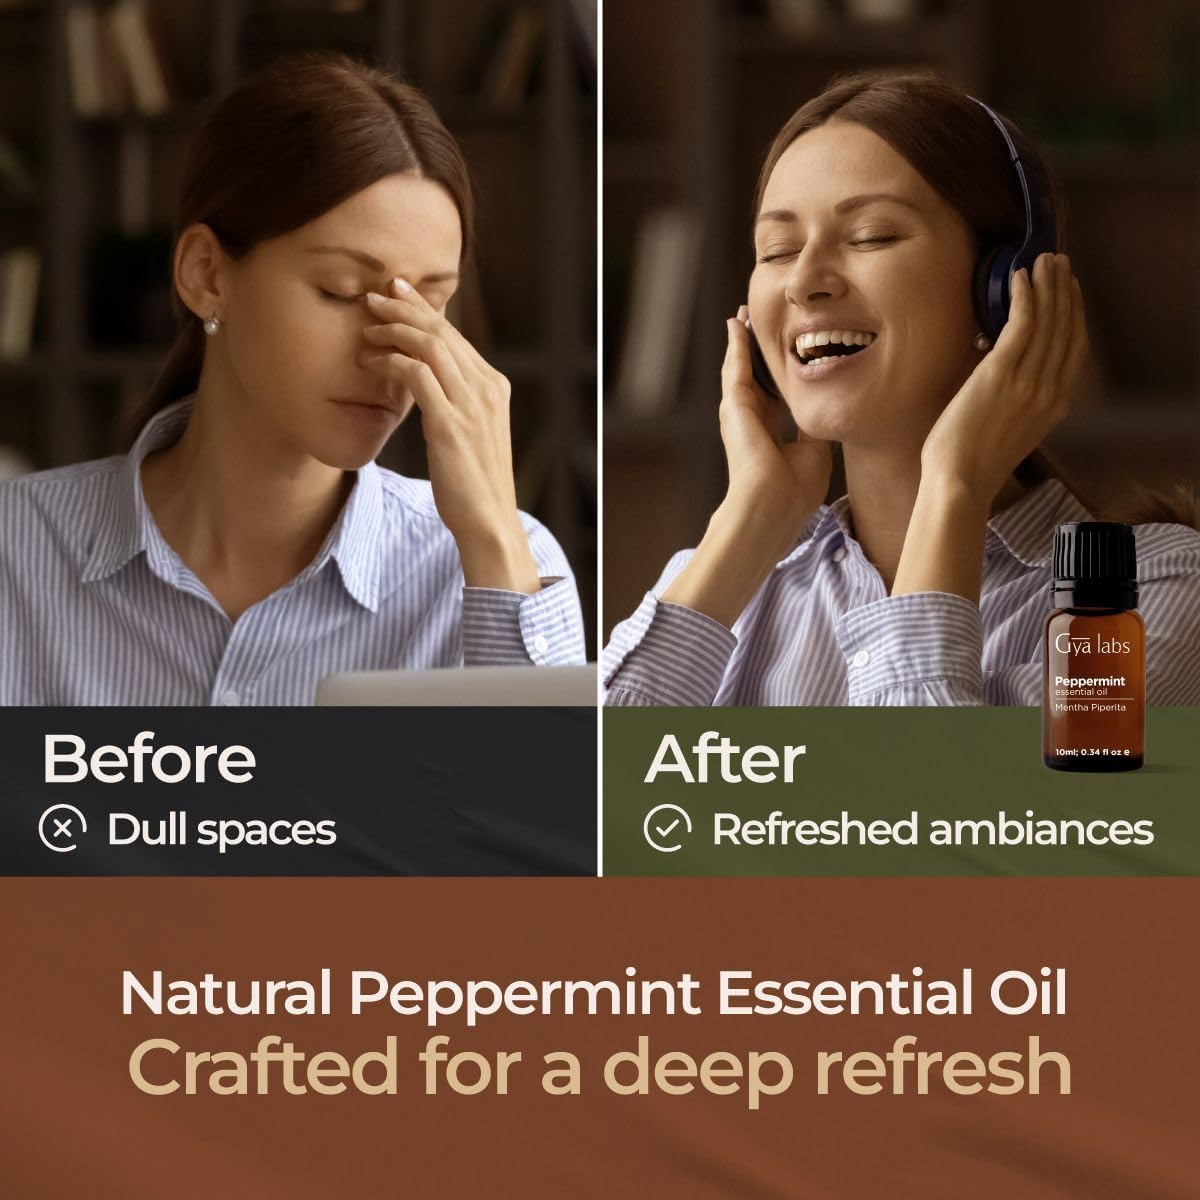 Gya Labs Peppermint Oil for Diffuser - 100% Natural Mint Essential Oils - Peppermint Essential Oil for Diffuser, Skin & Hair (0.34 fl oz)